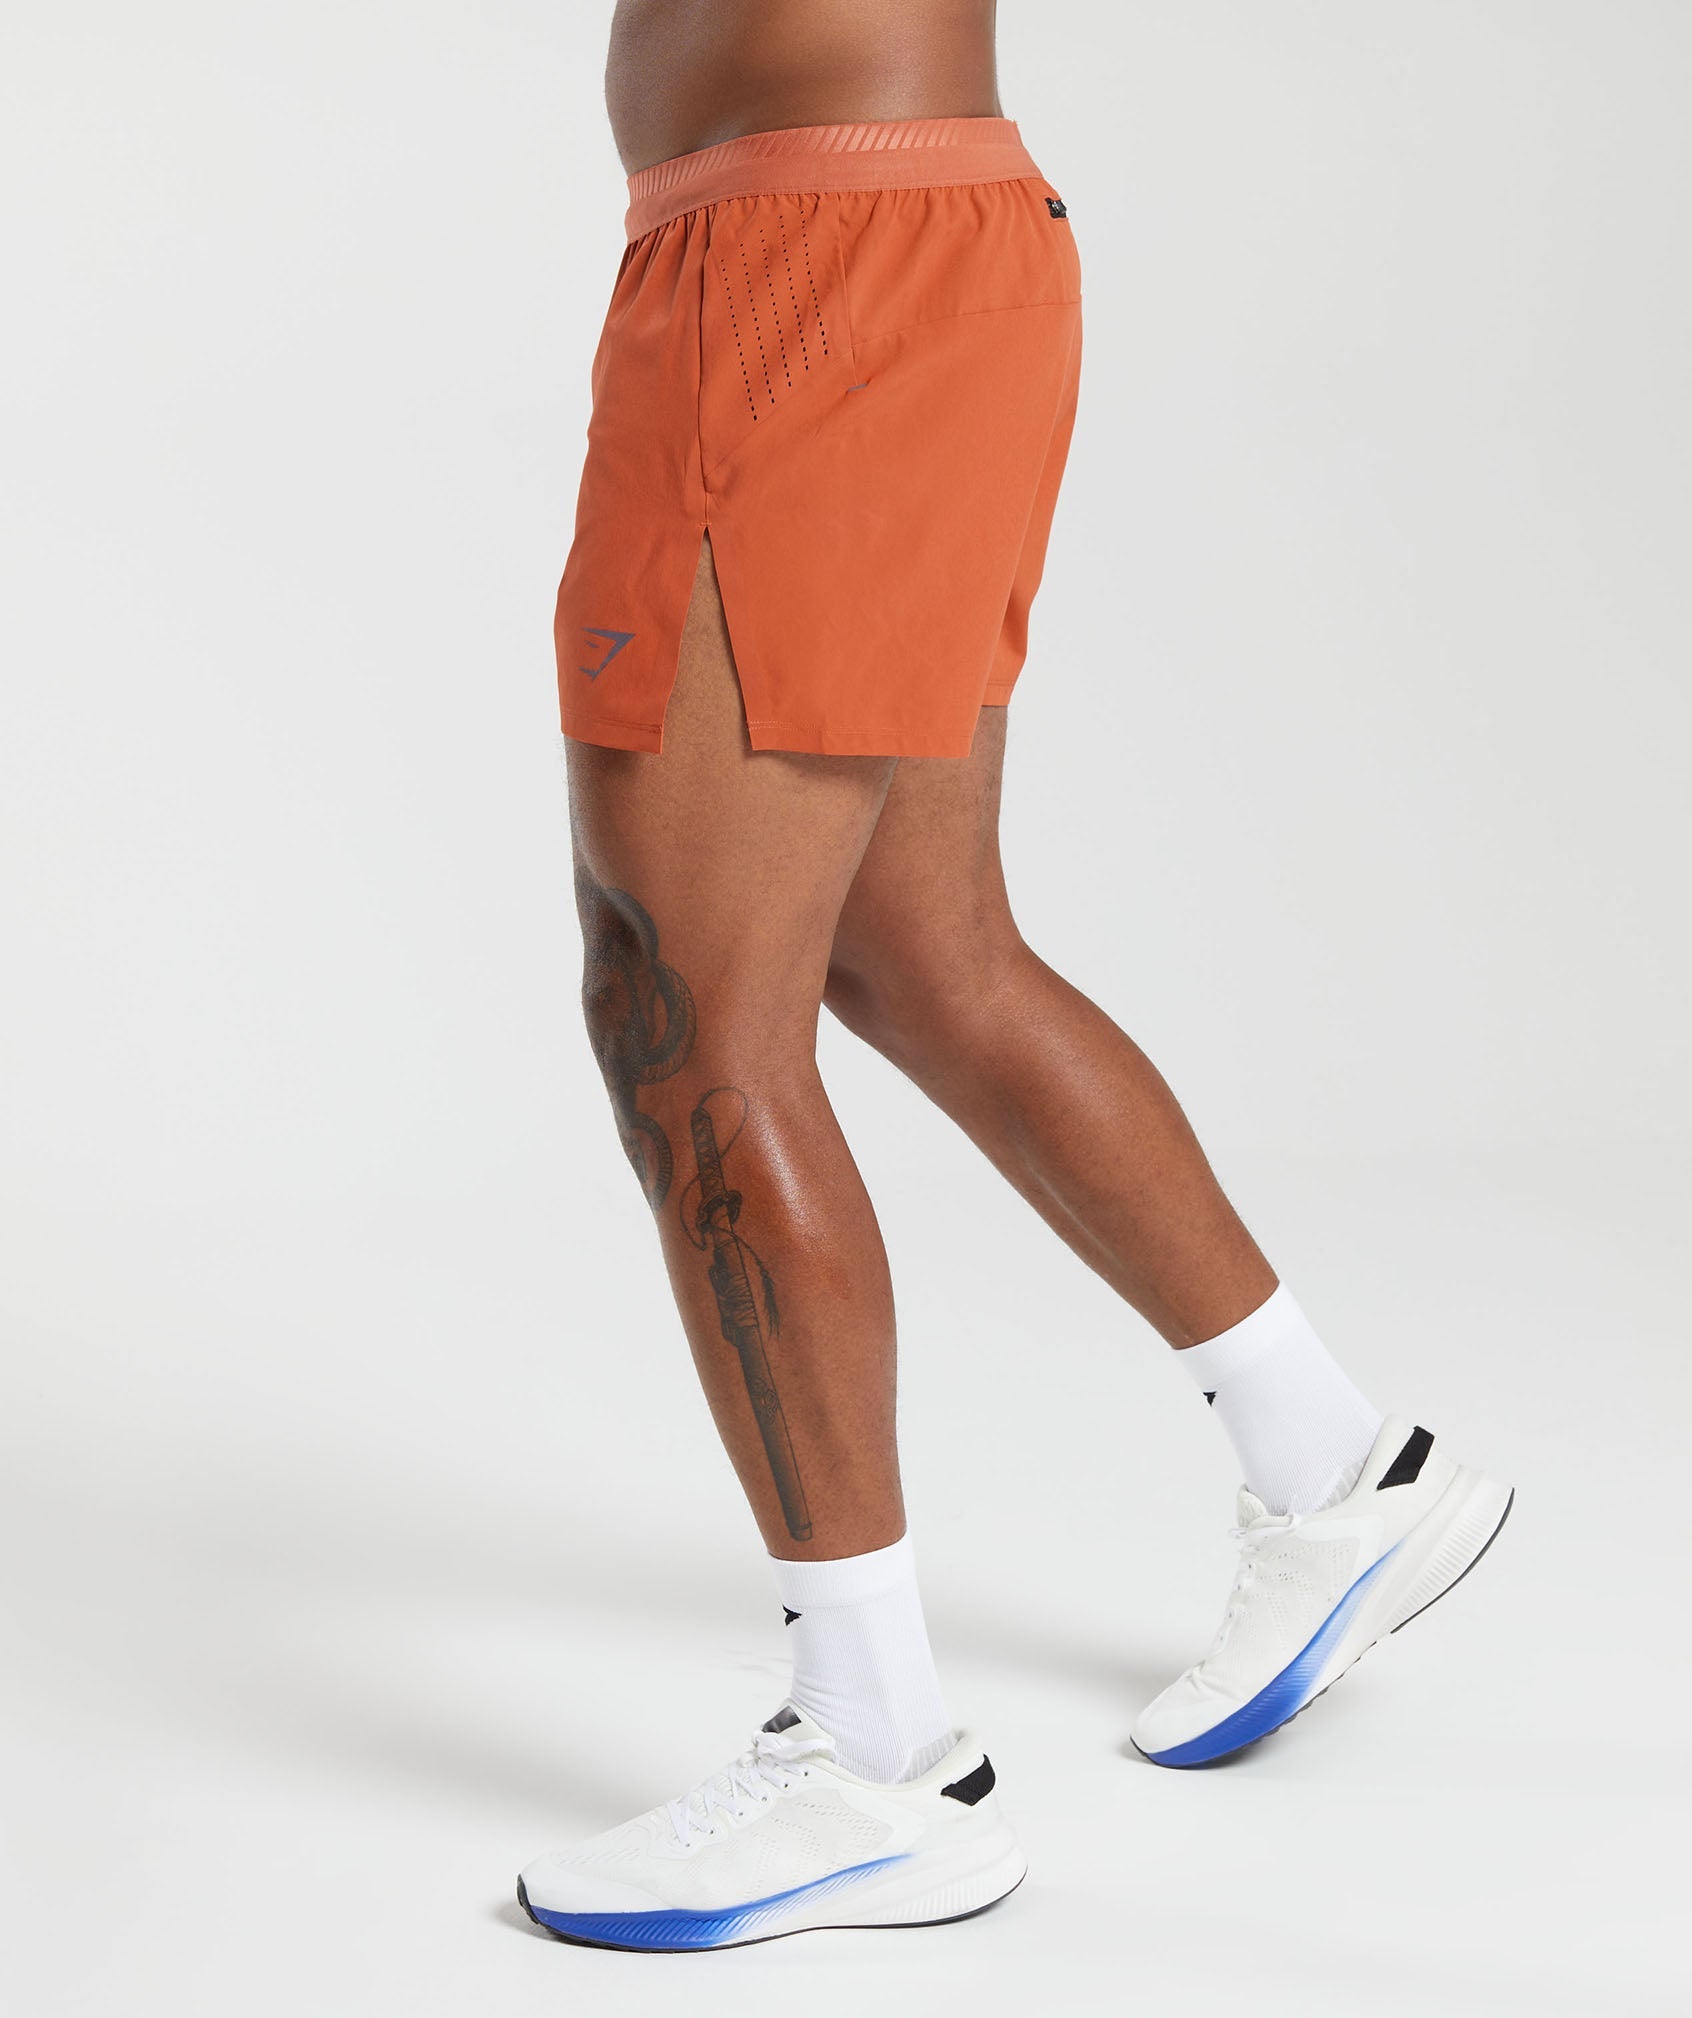 Apex Run 4" Shorts in Rust Orange - view 3